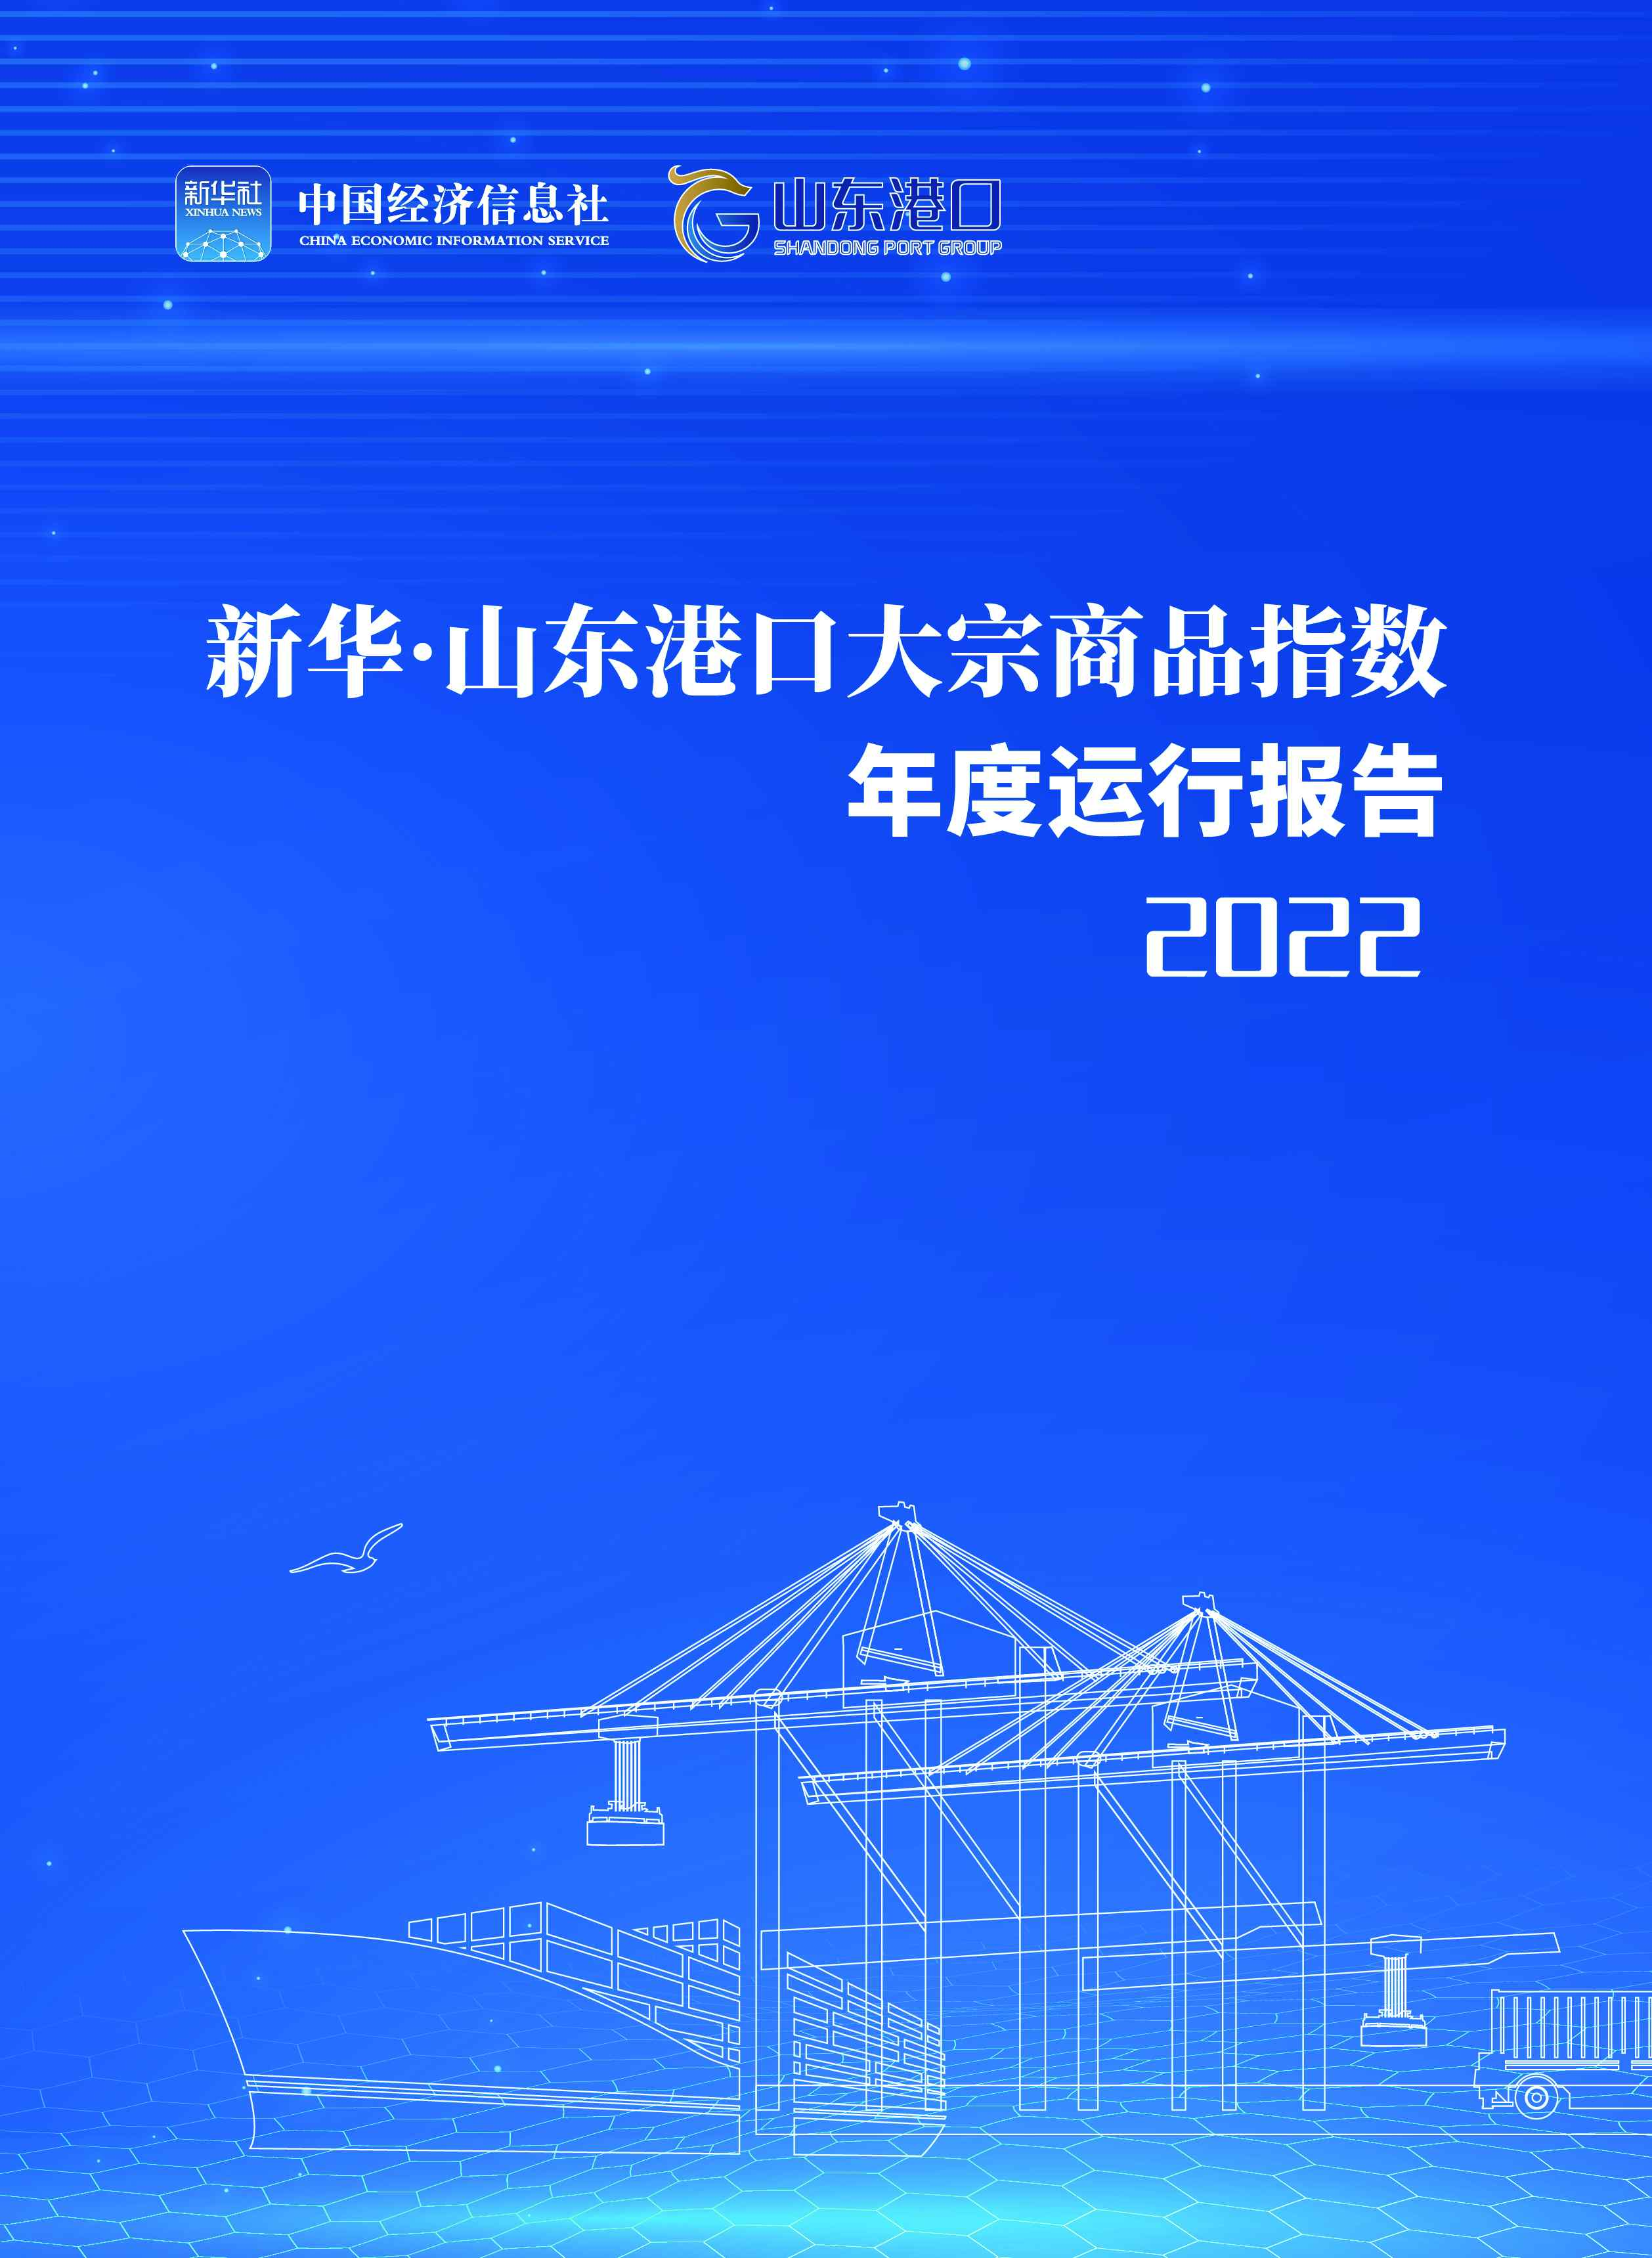 20BG大游22青岛陆海枢纽发展指数年度运行报告(2022)(图)